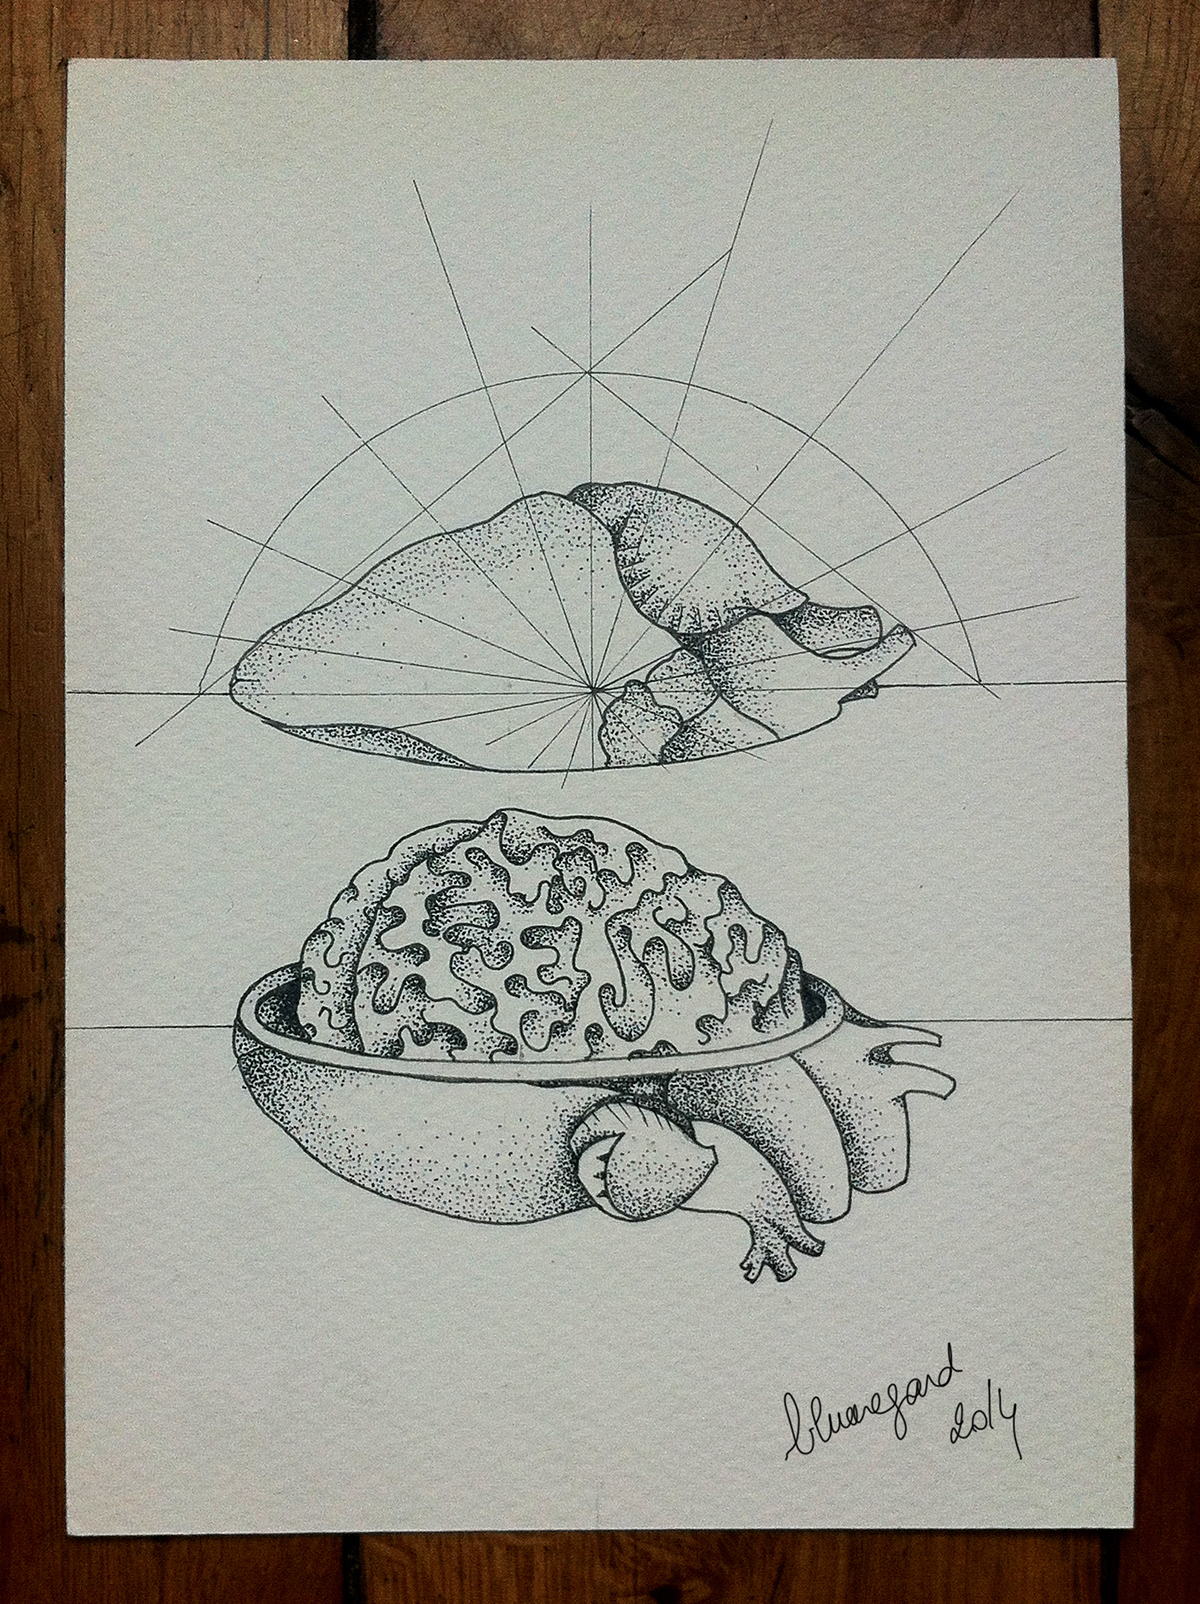 dot work dot lines doodle sketch draw sketching heart brain hands anatomical